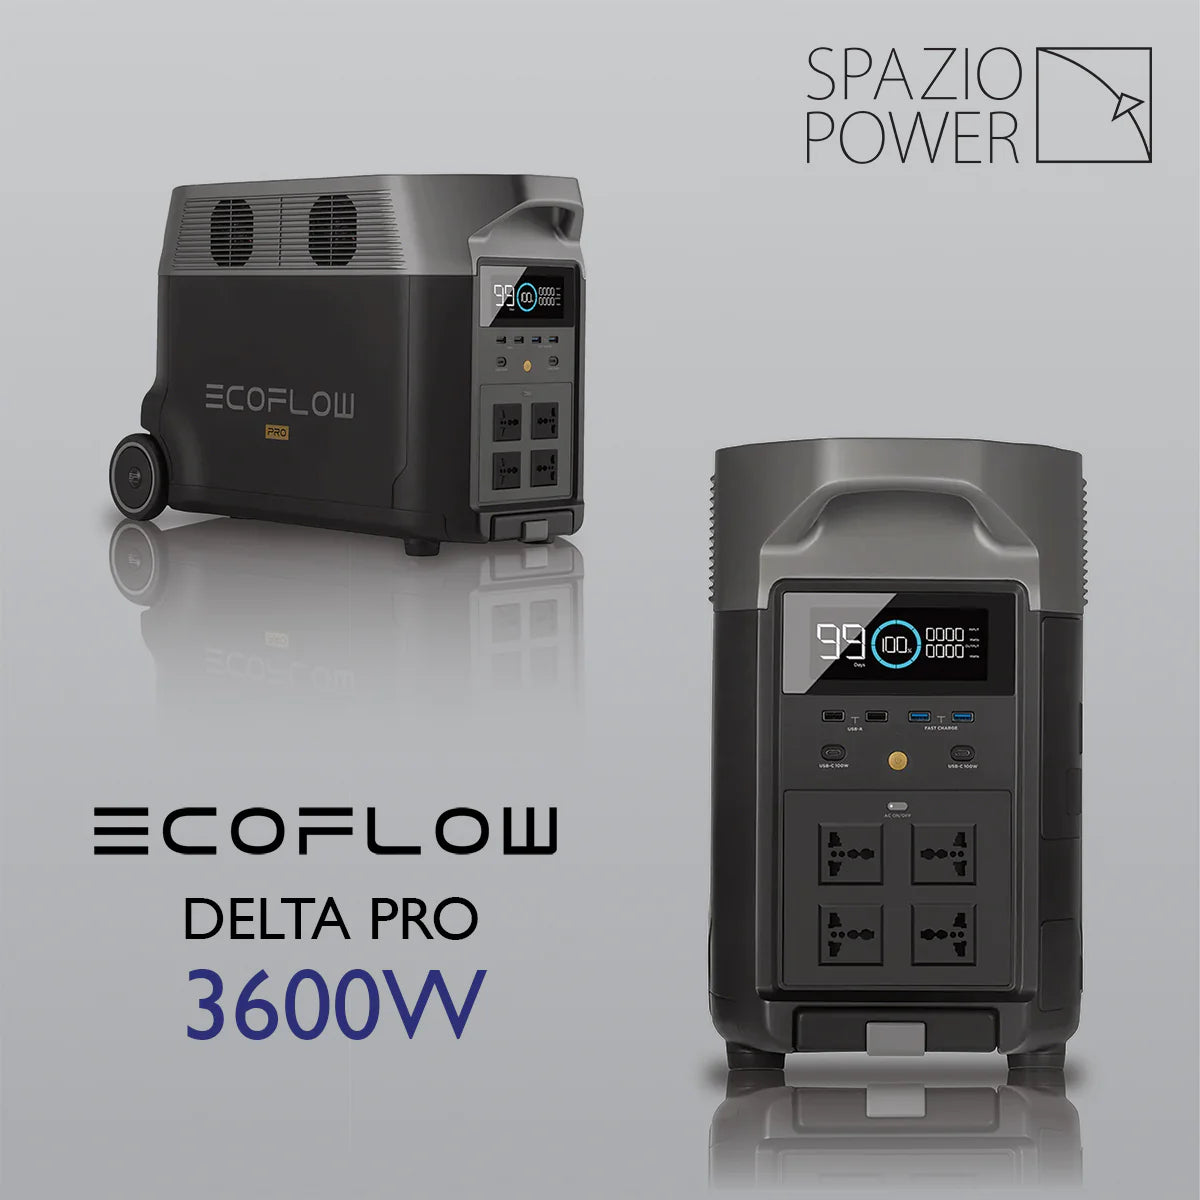 EcoFlow Delta Pro 3600W Portable Power Backup or Expandable Ecosystem